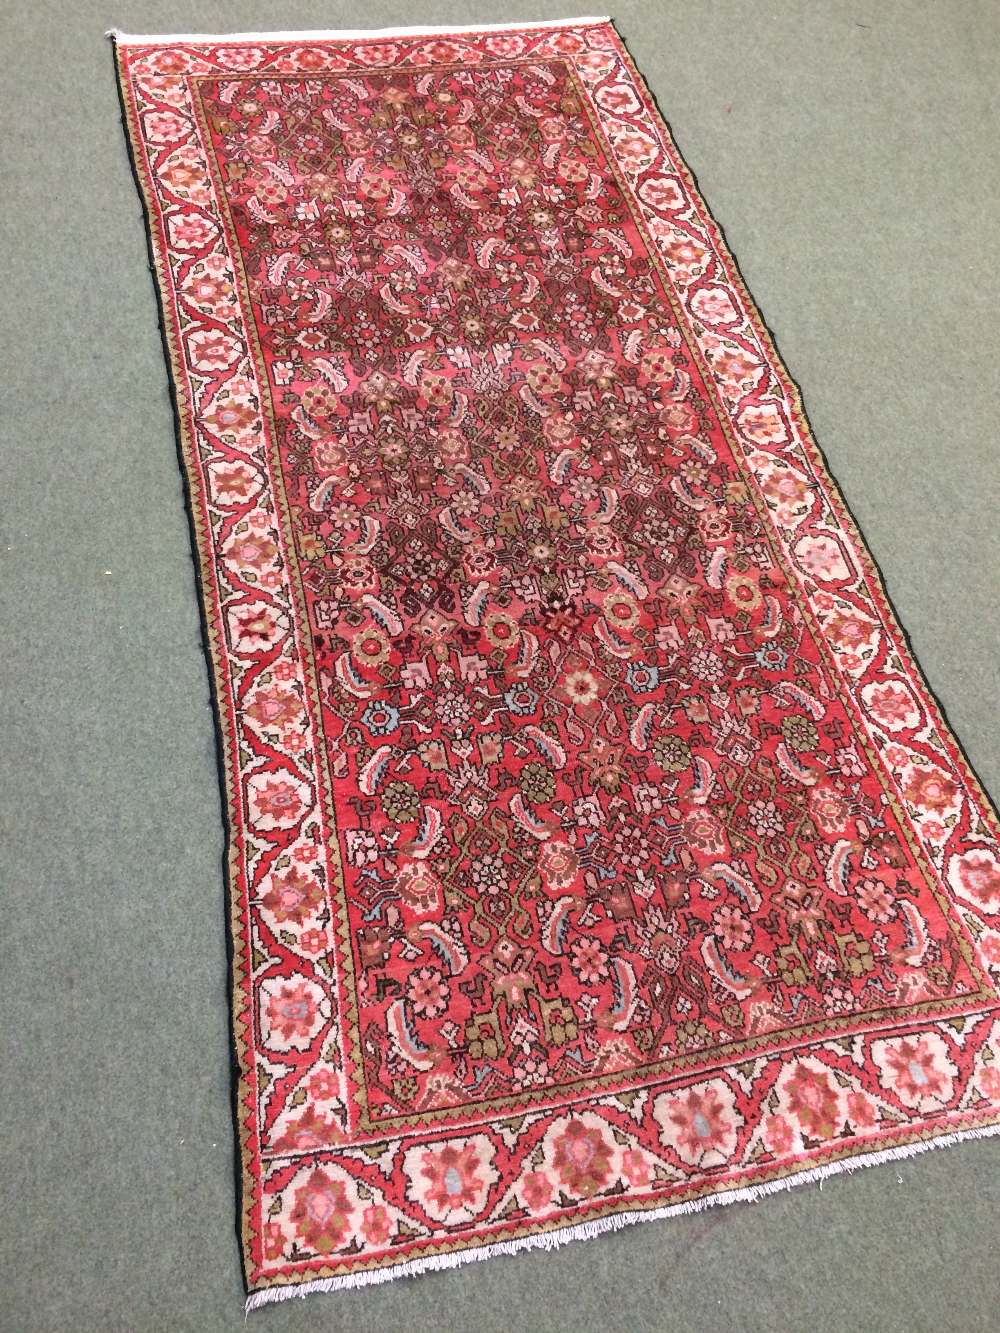 Antique Malayer Persian rug circa 1900s 2.7 X 1.26m - Image 2 of 3